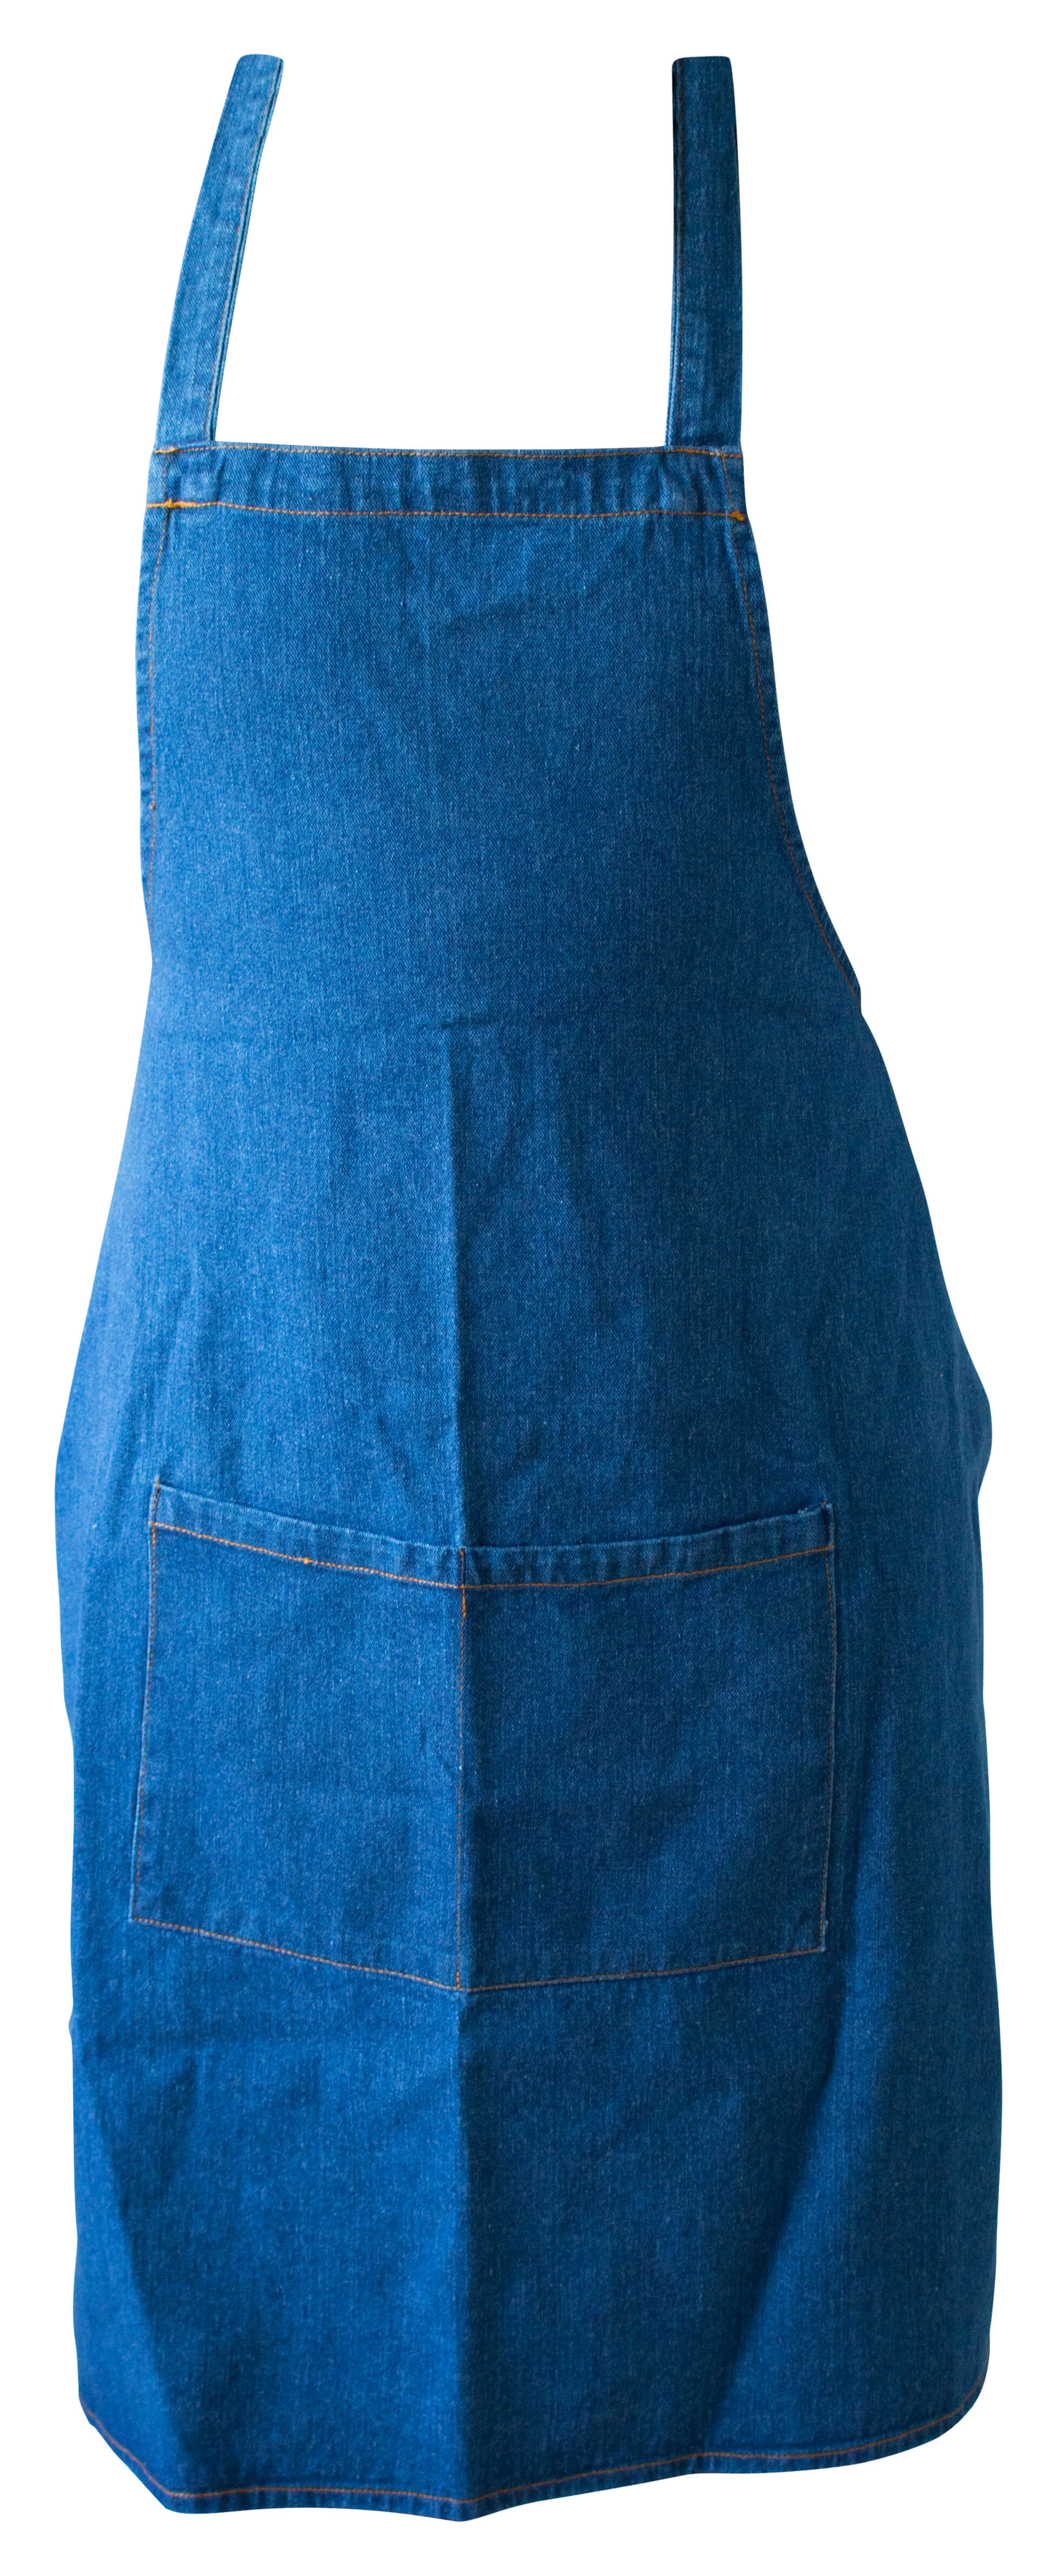 Bib apron, Denim, 90x70cm - washed (light)